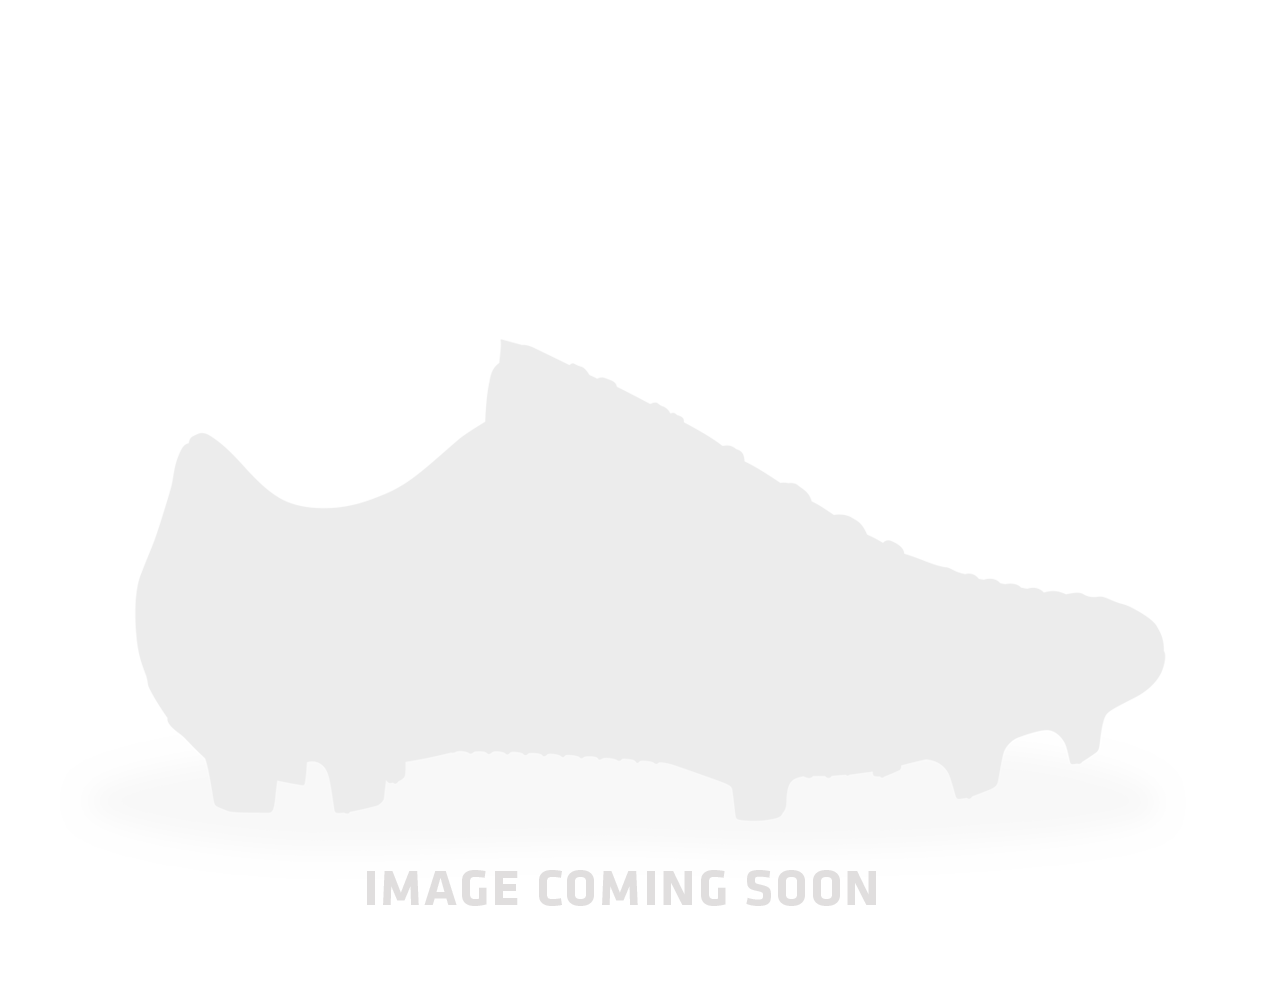 Nike Men's Hypervenom Proximo II Dynamic Fit Turf Soccer Shoes Black/Metalic Silver/Anthracite